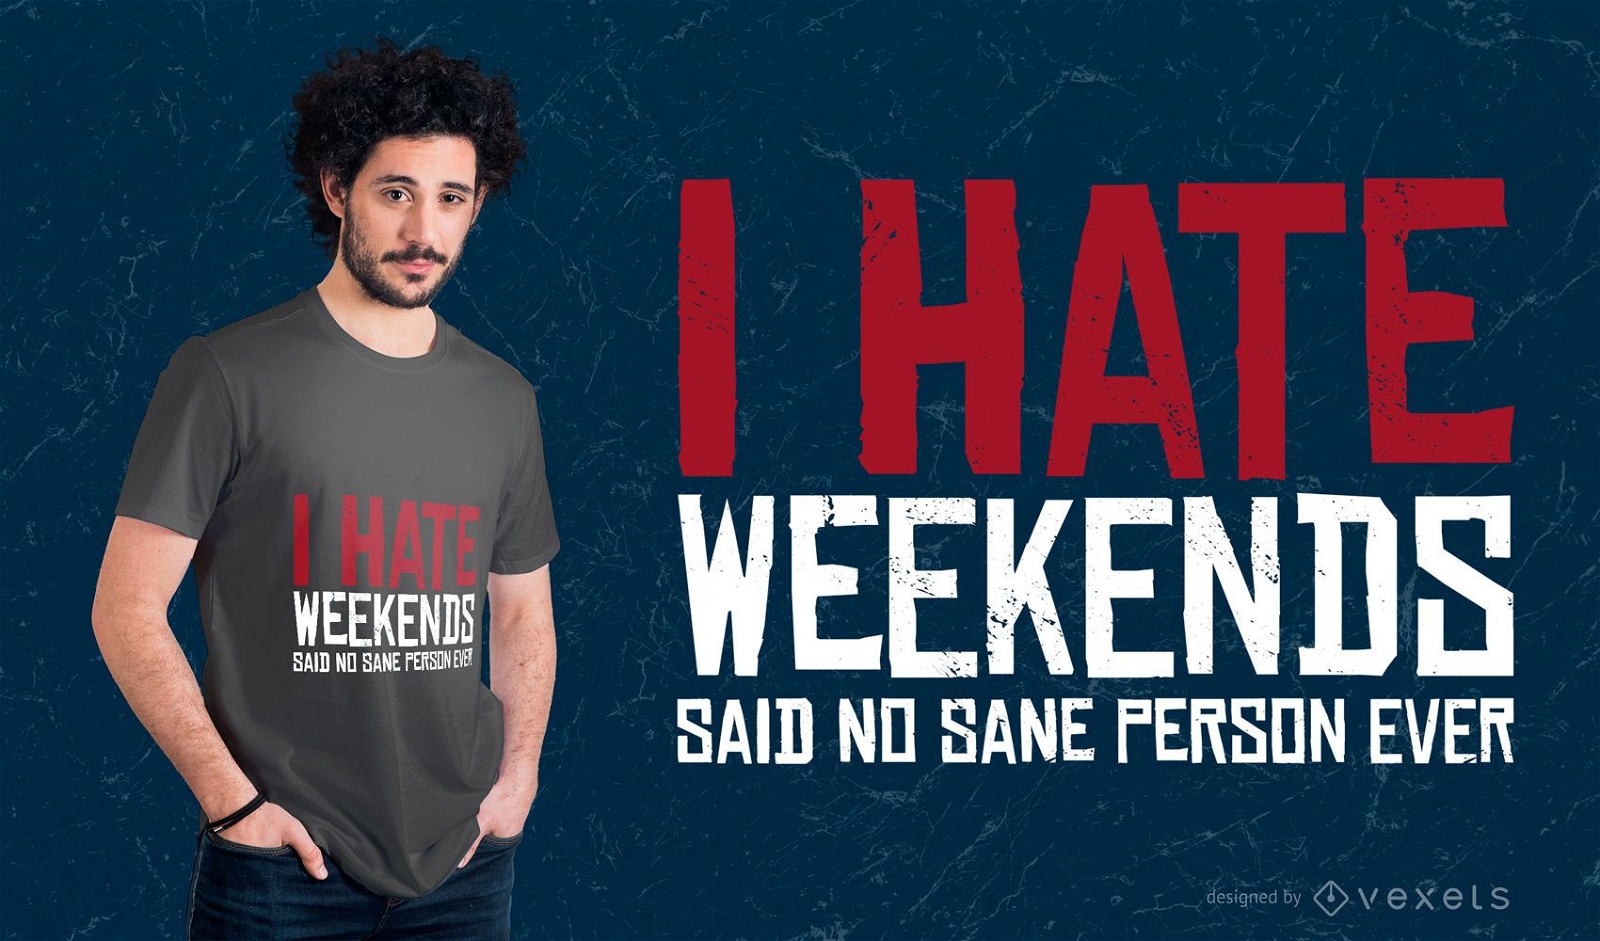 Hasswochenenden zitieren T-Shirt Design